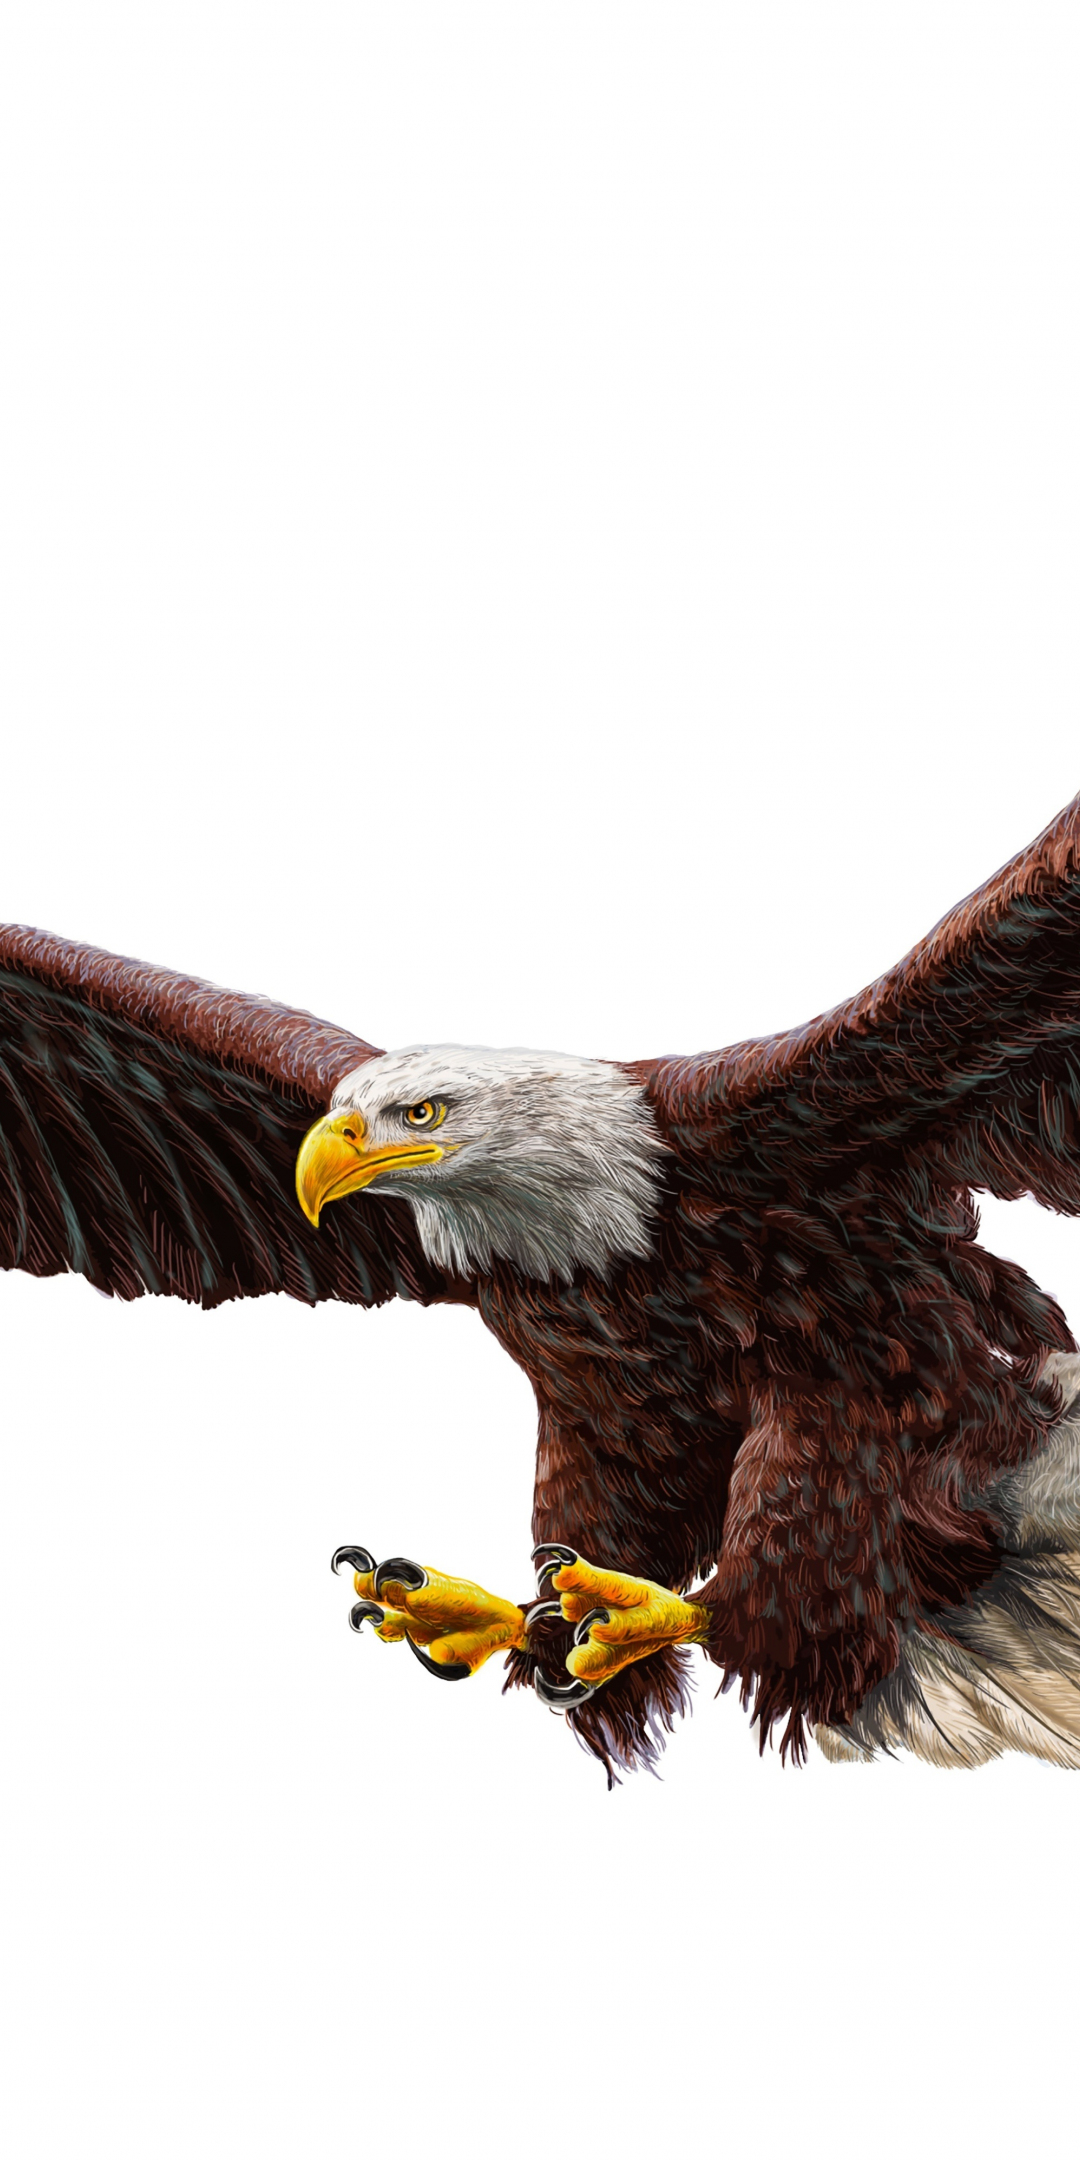 Bald eagle, bird predator, art, 1080x2160 wallpaper